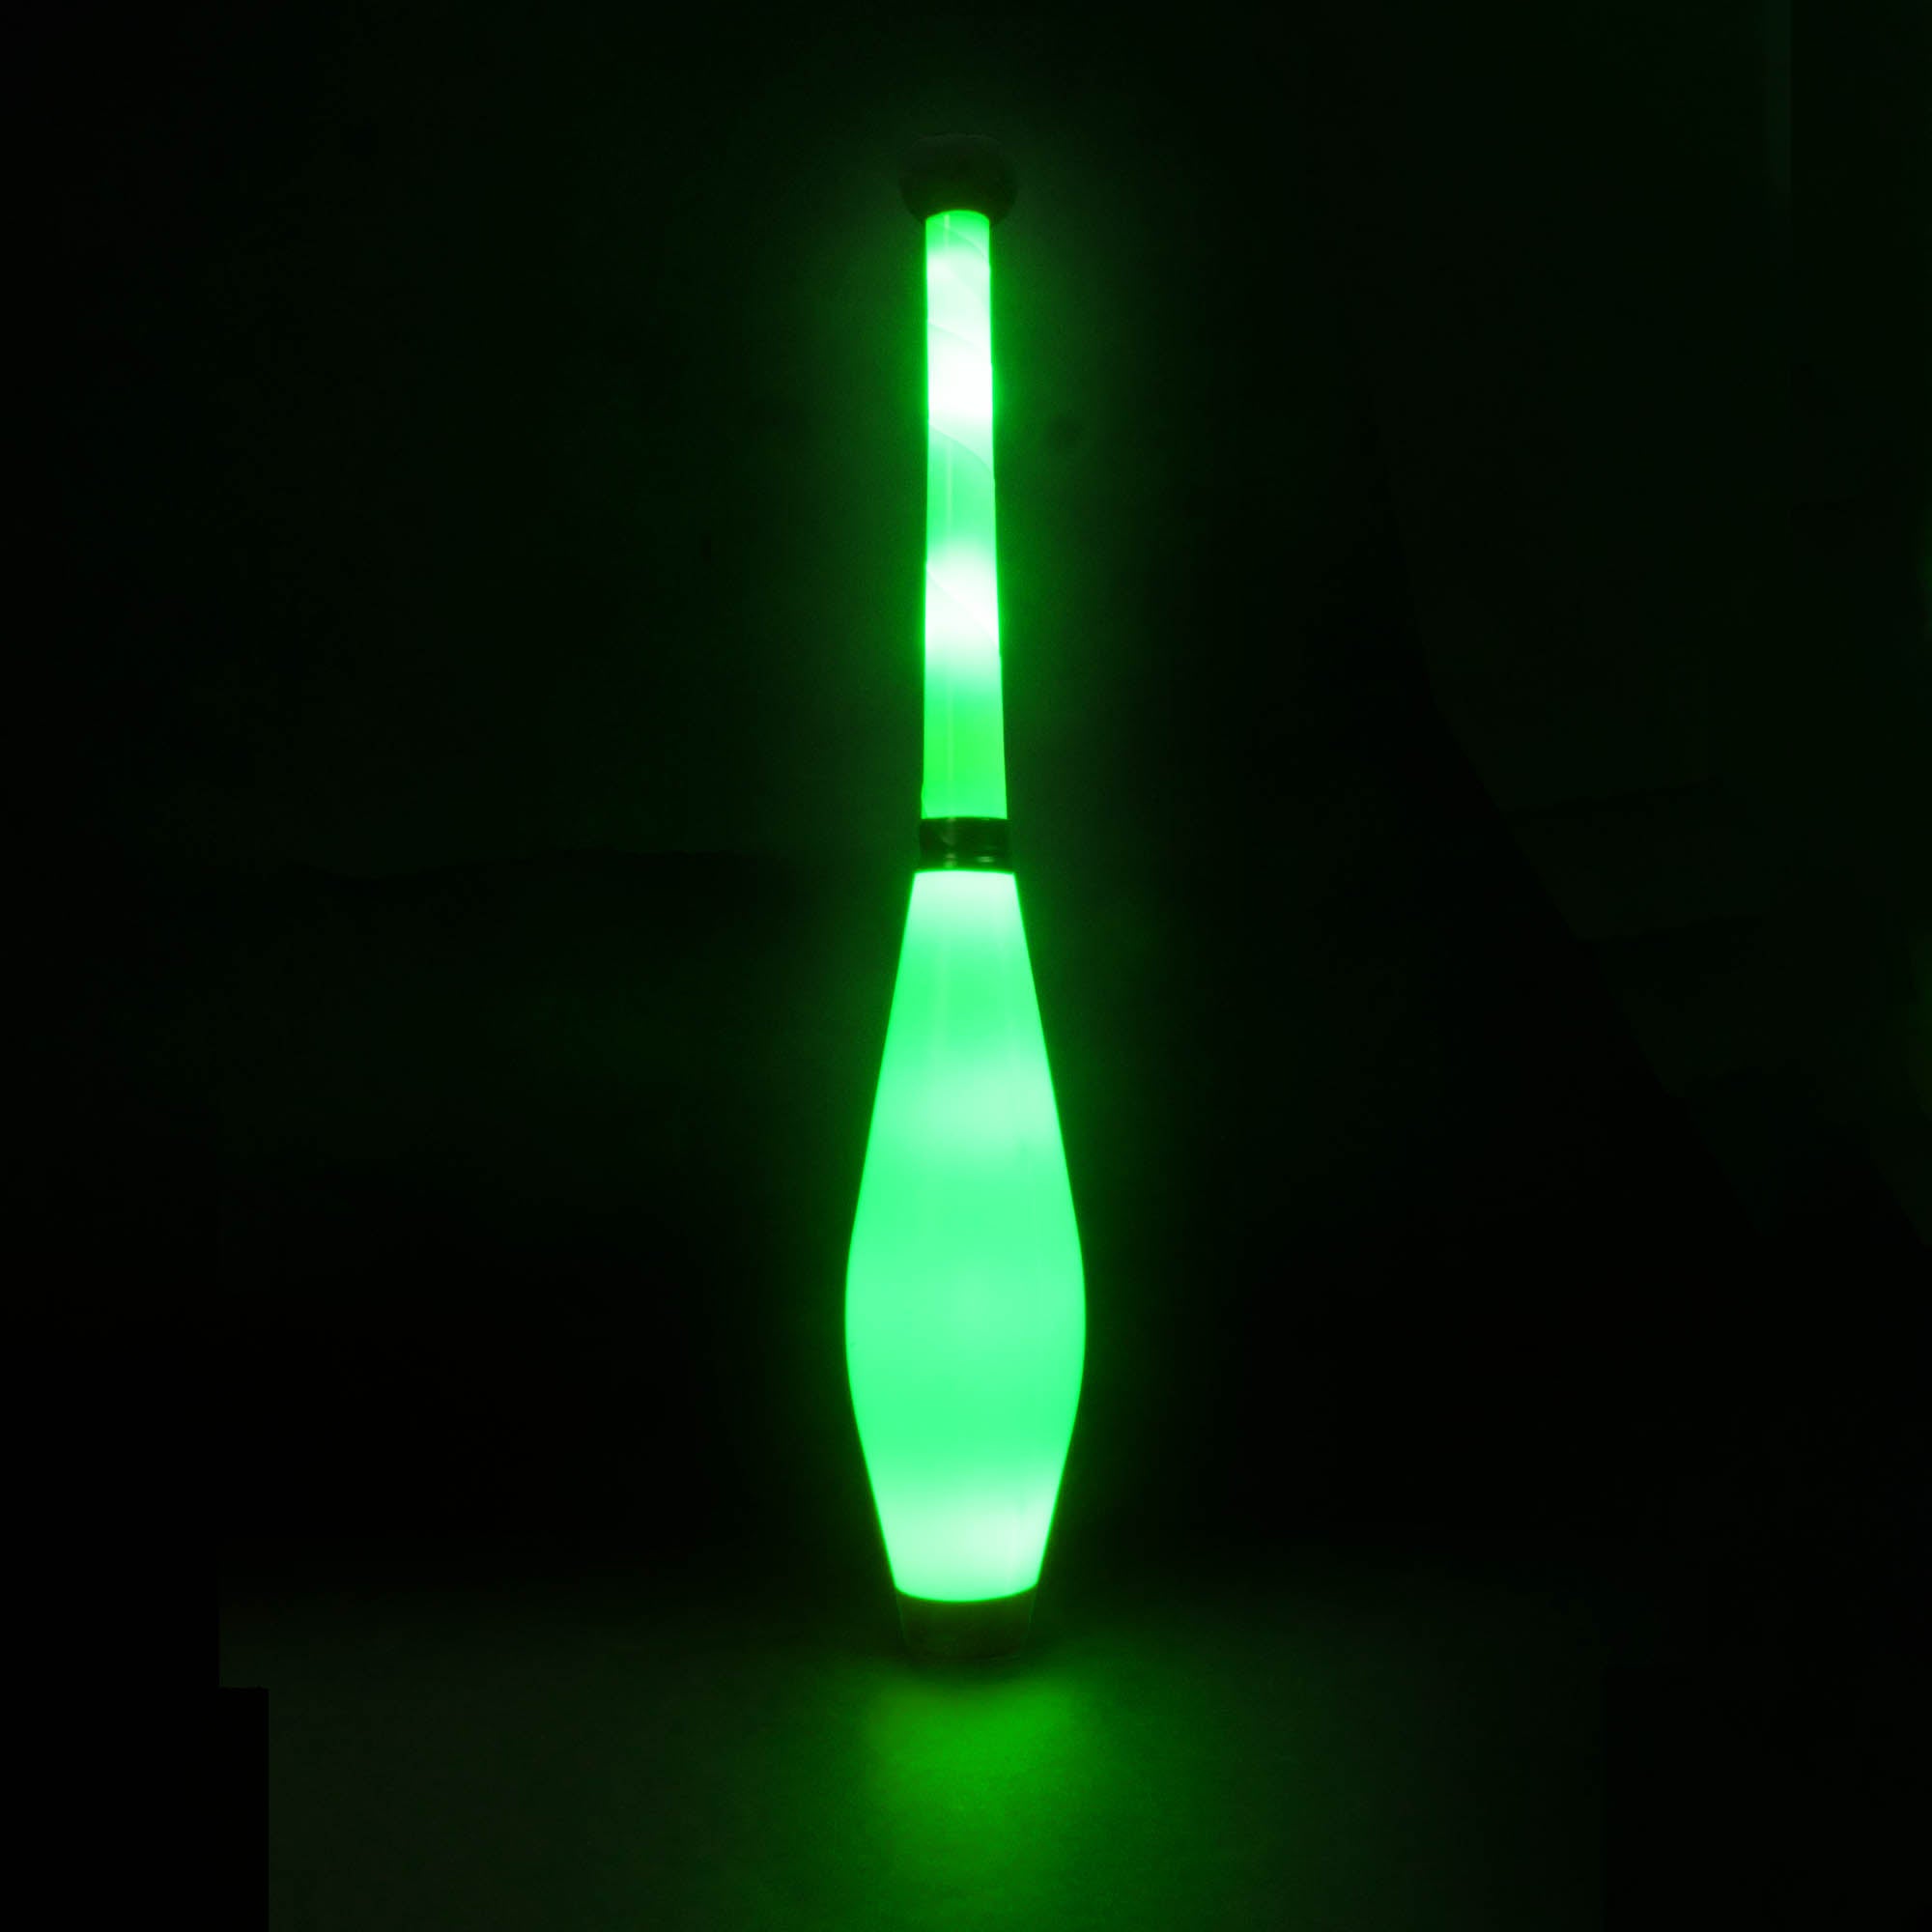 kosmos juggling club glowing green